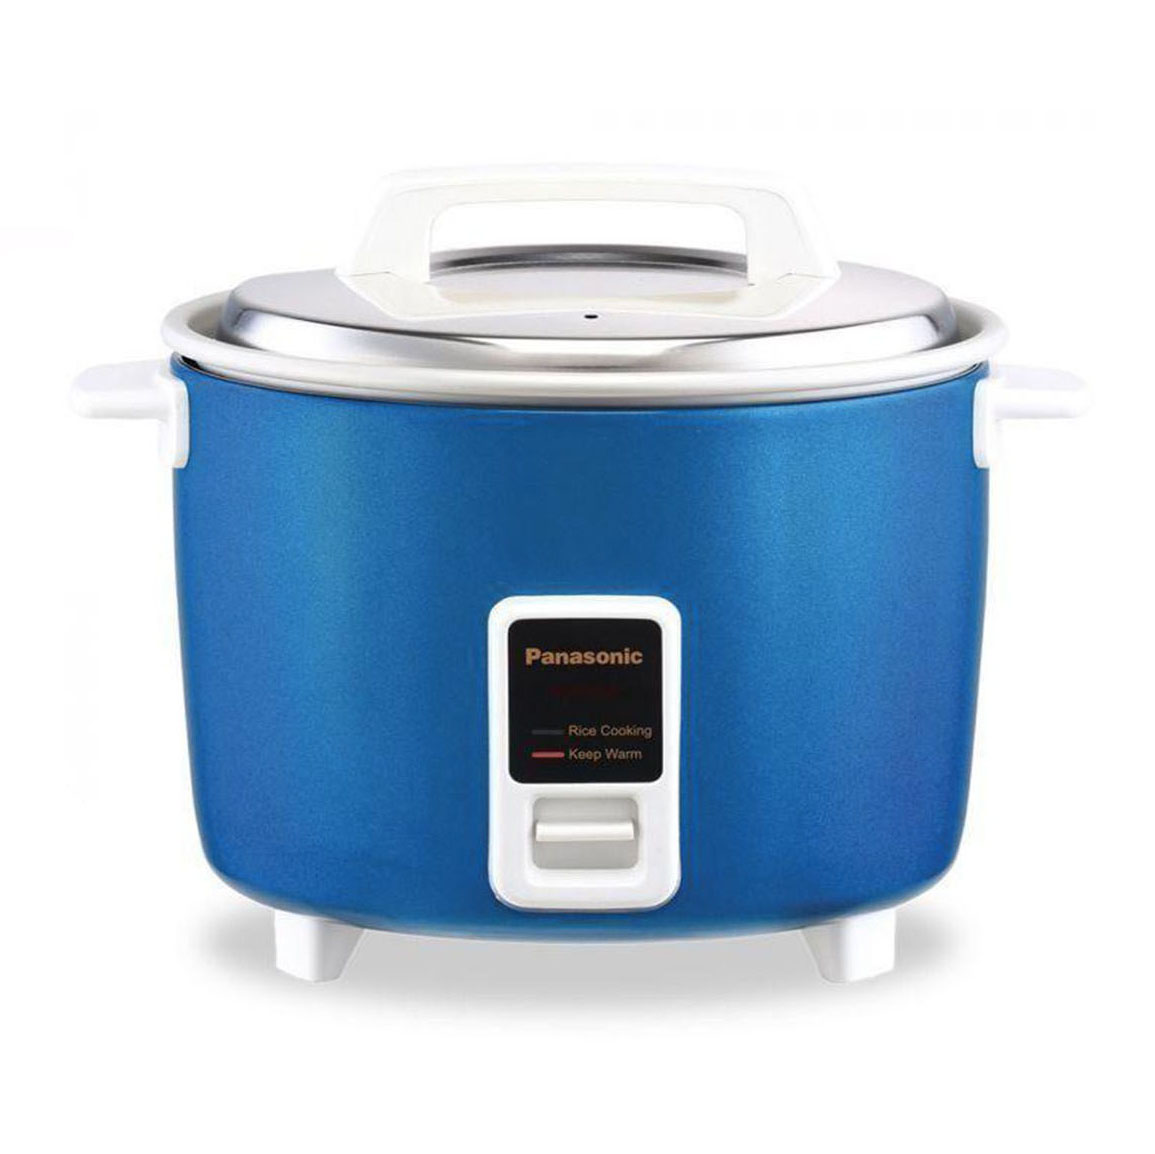 Panasonic Rice Cooker SR-Y10 (Blue)